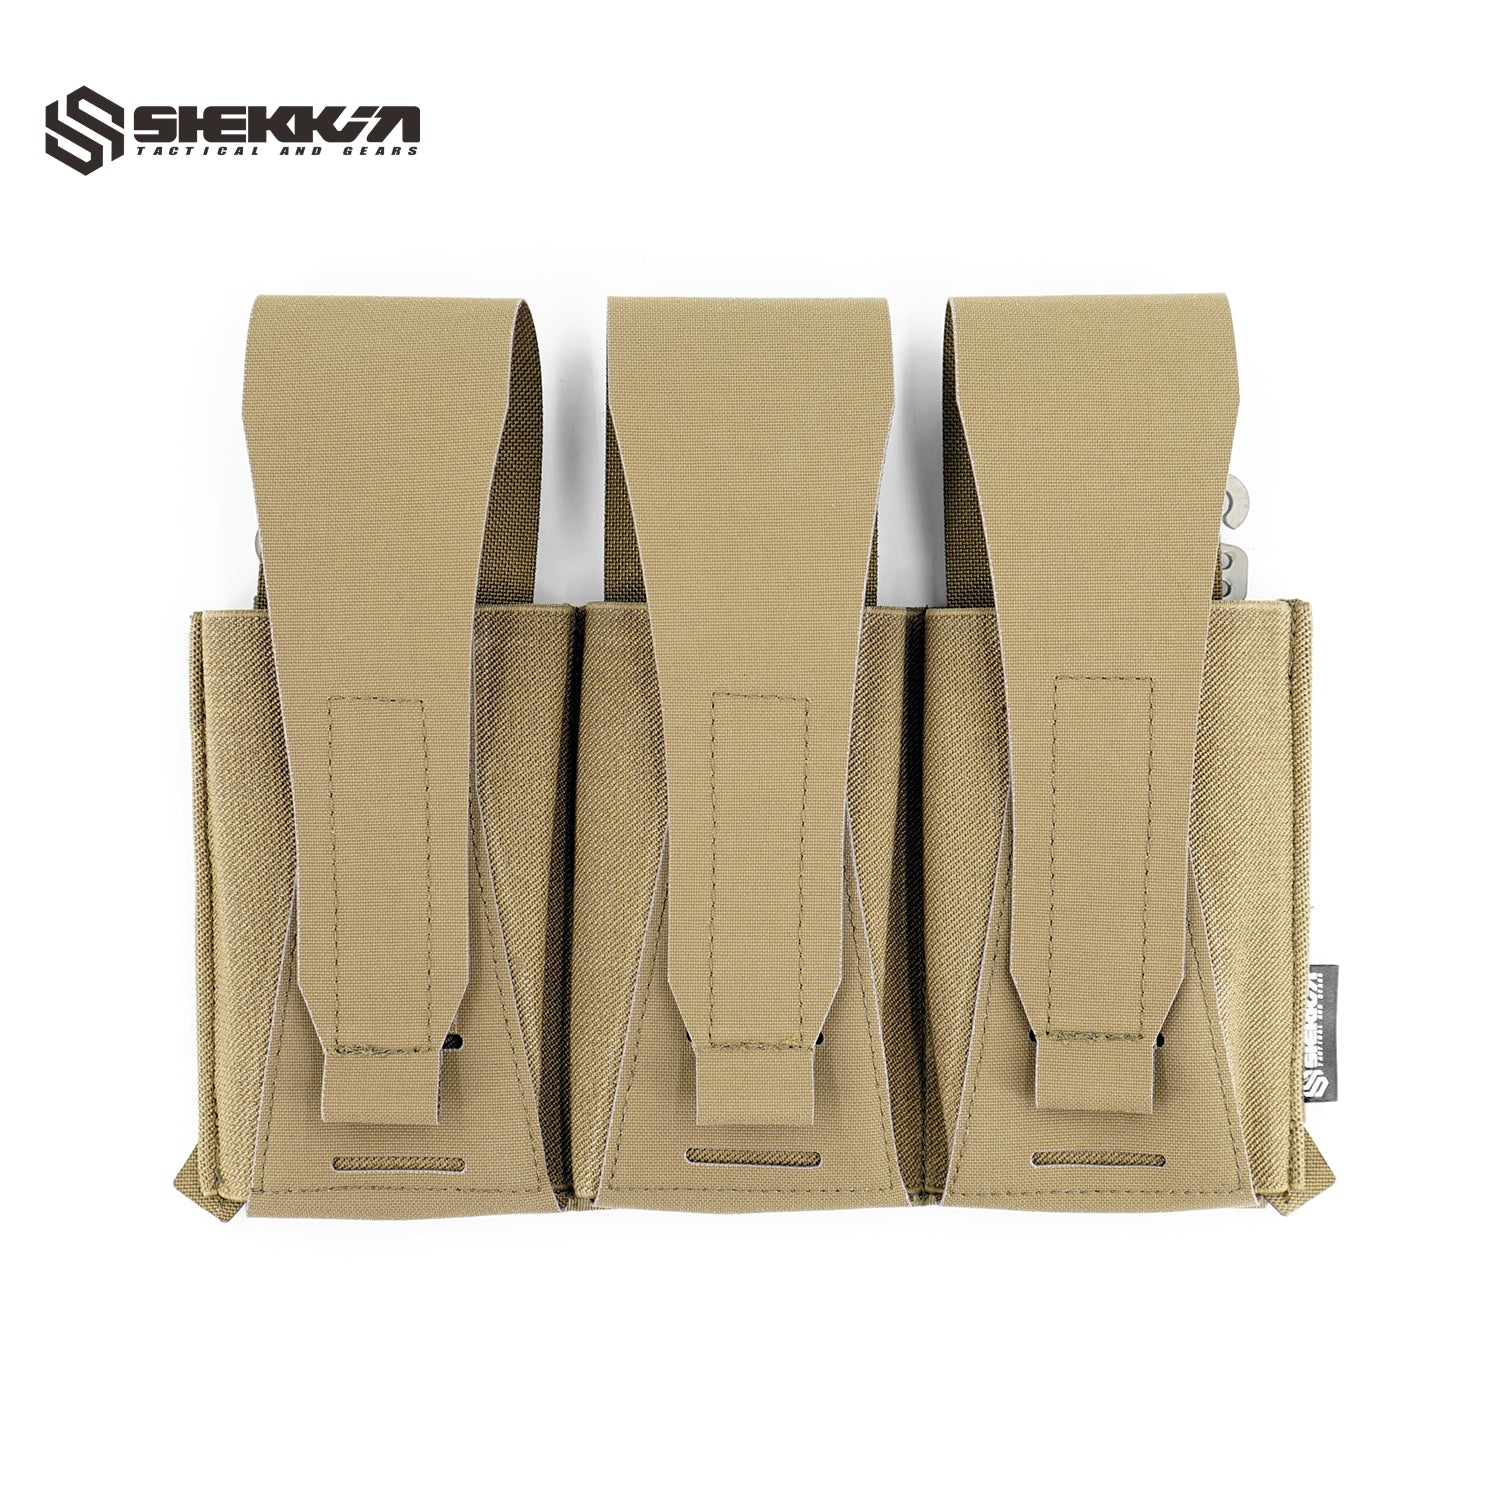 GBRS style universal M4 panel - Shekkin Gears